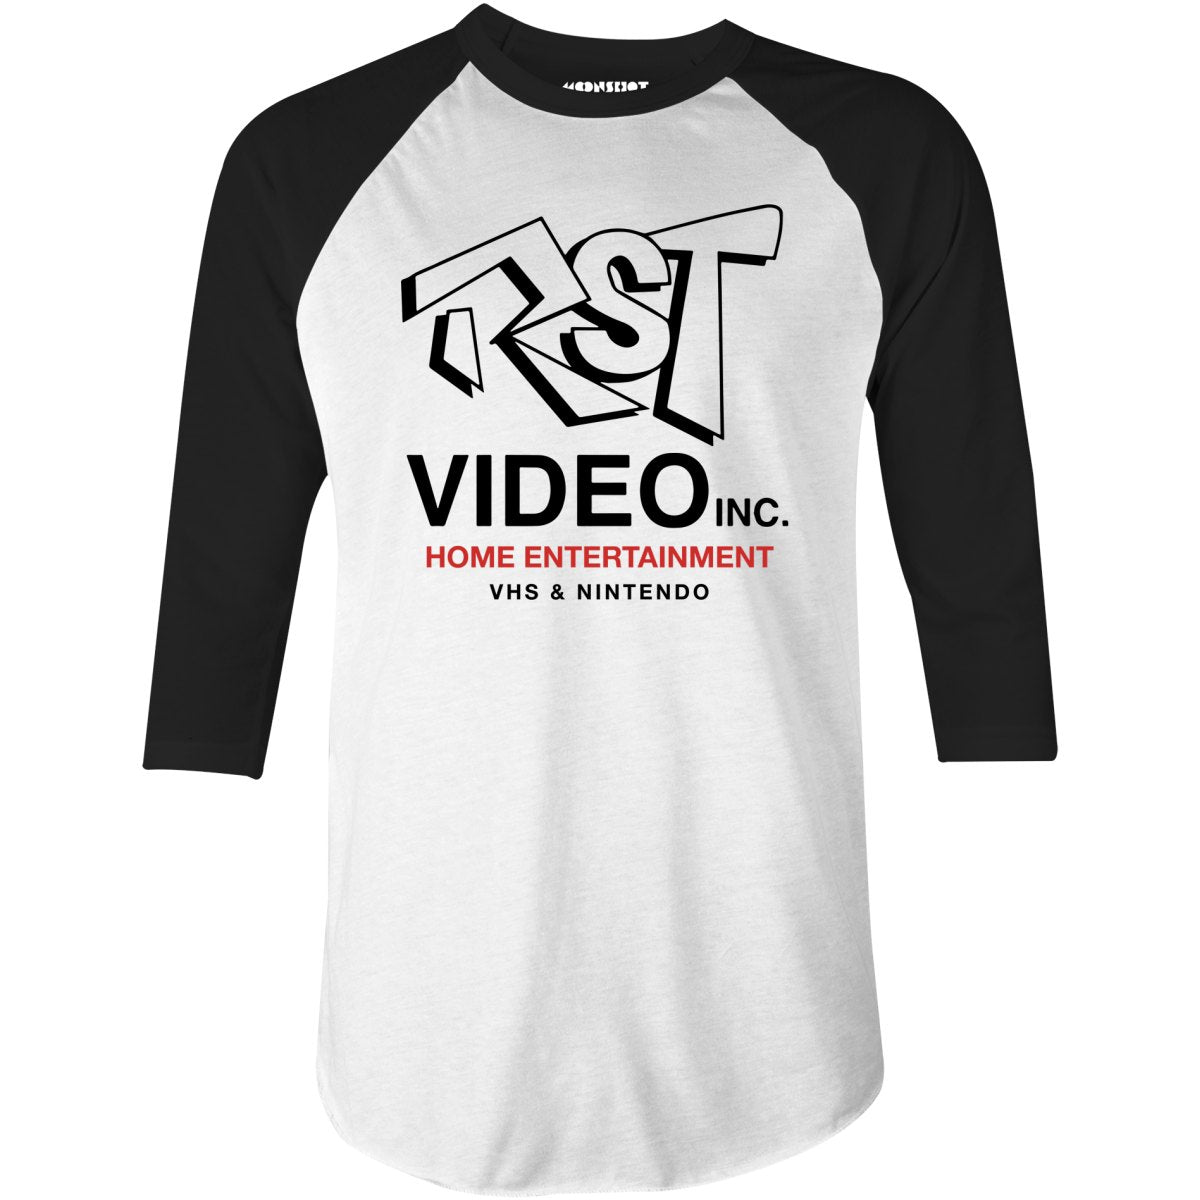 RST Video - Clerks - 3/4 Sleeve Raglan T-Shirt